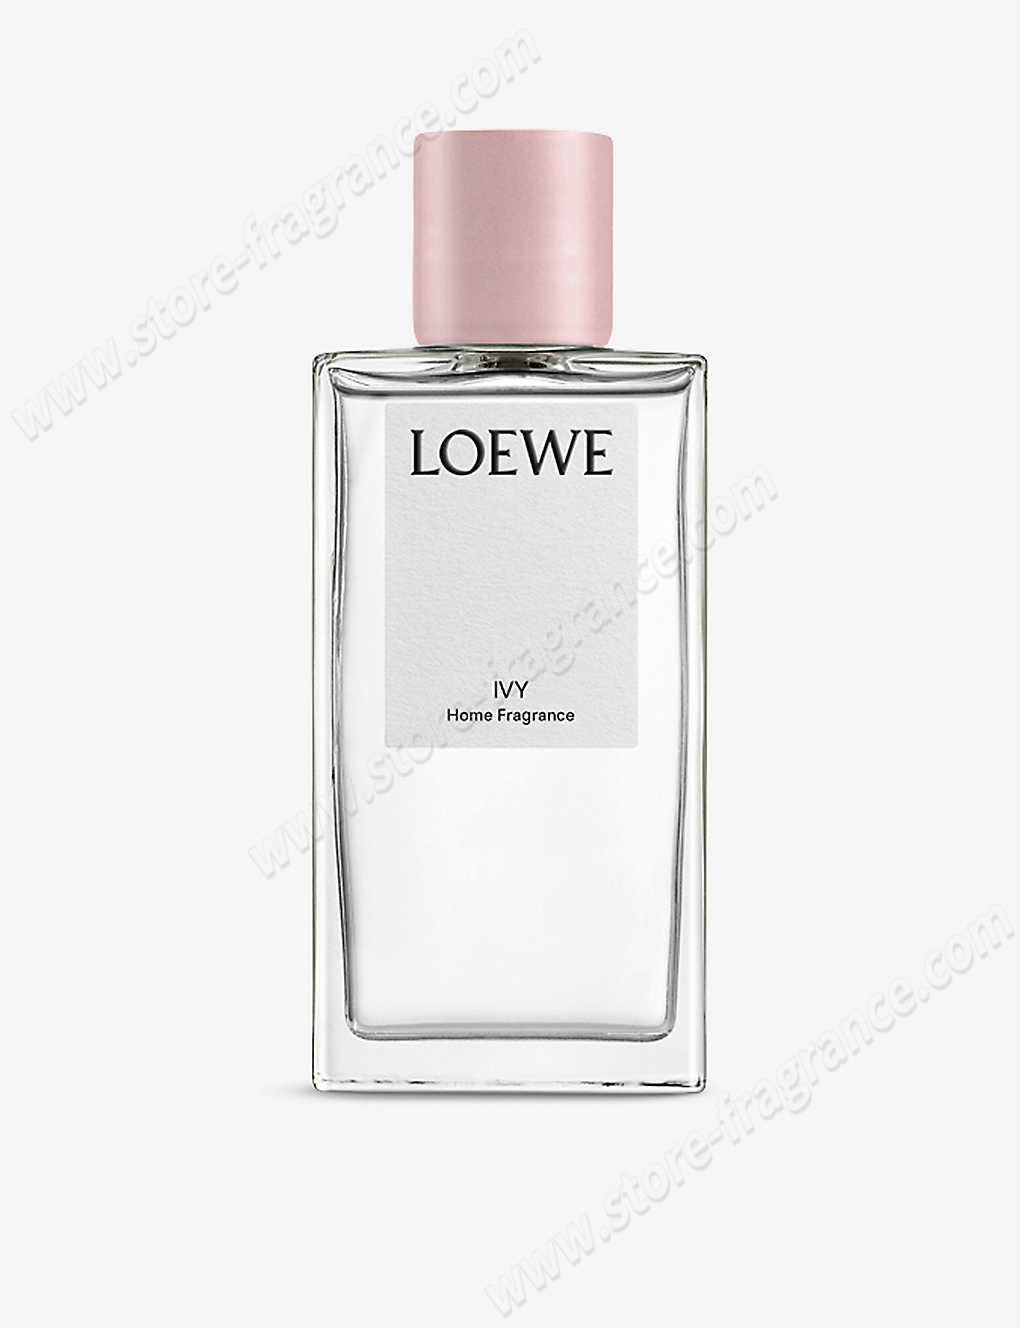 LOEWE/Ivy home fragrance 150ml ✿ Discount Store - LOEWE/Ivy home fragrance 150ml ✿ Discount Store